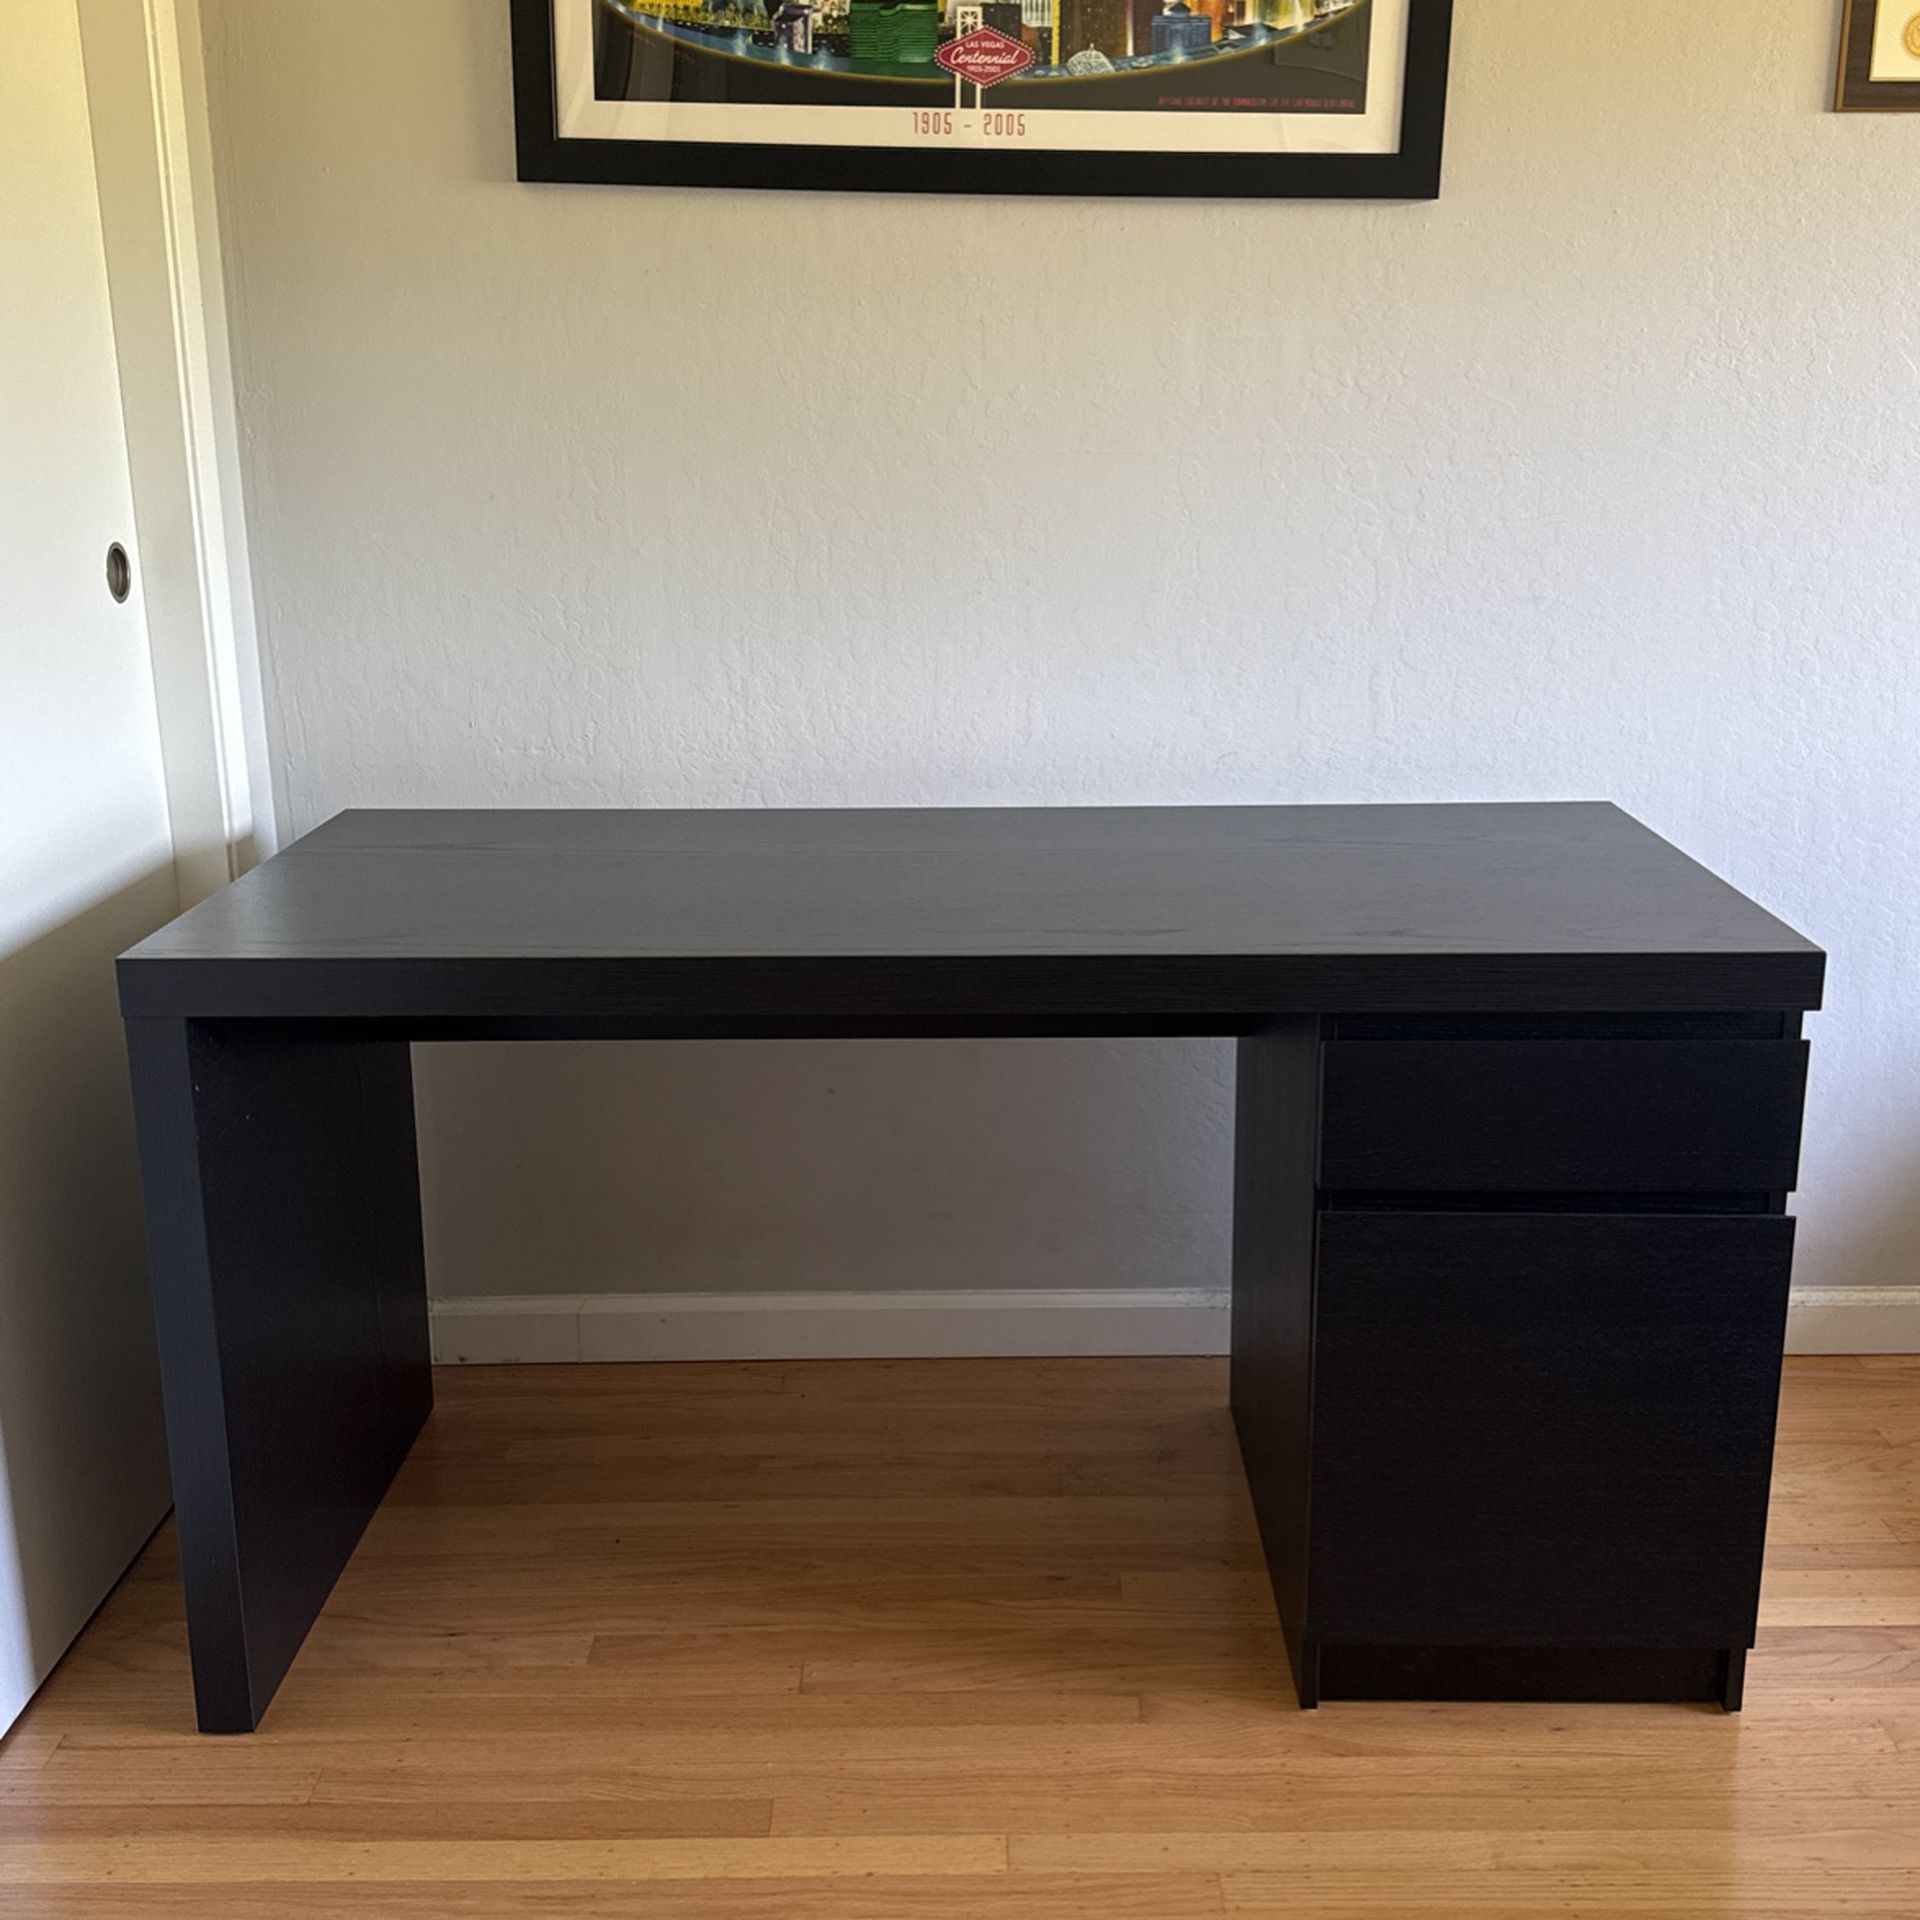 Large Brown/Black Desk - Perfect Condition (IKEA MALM)